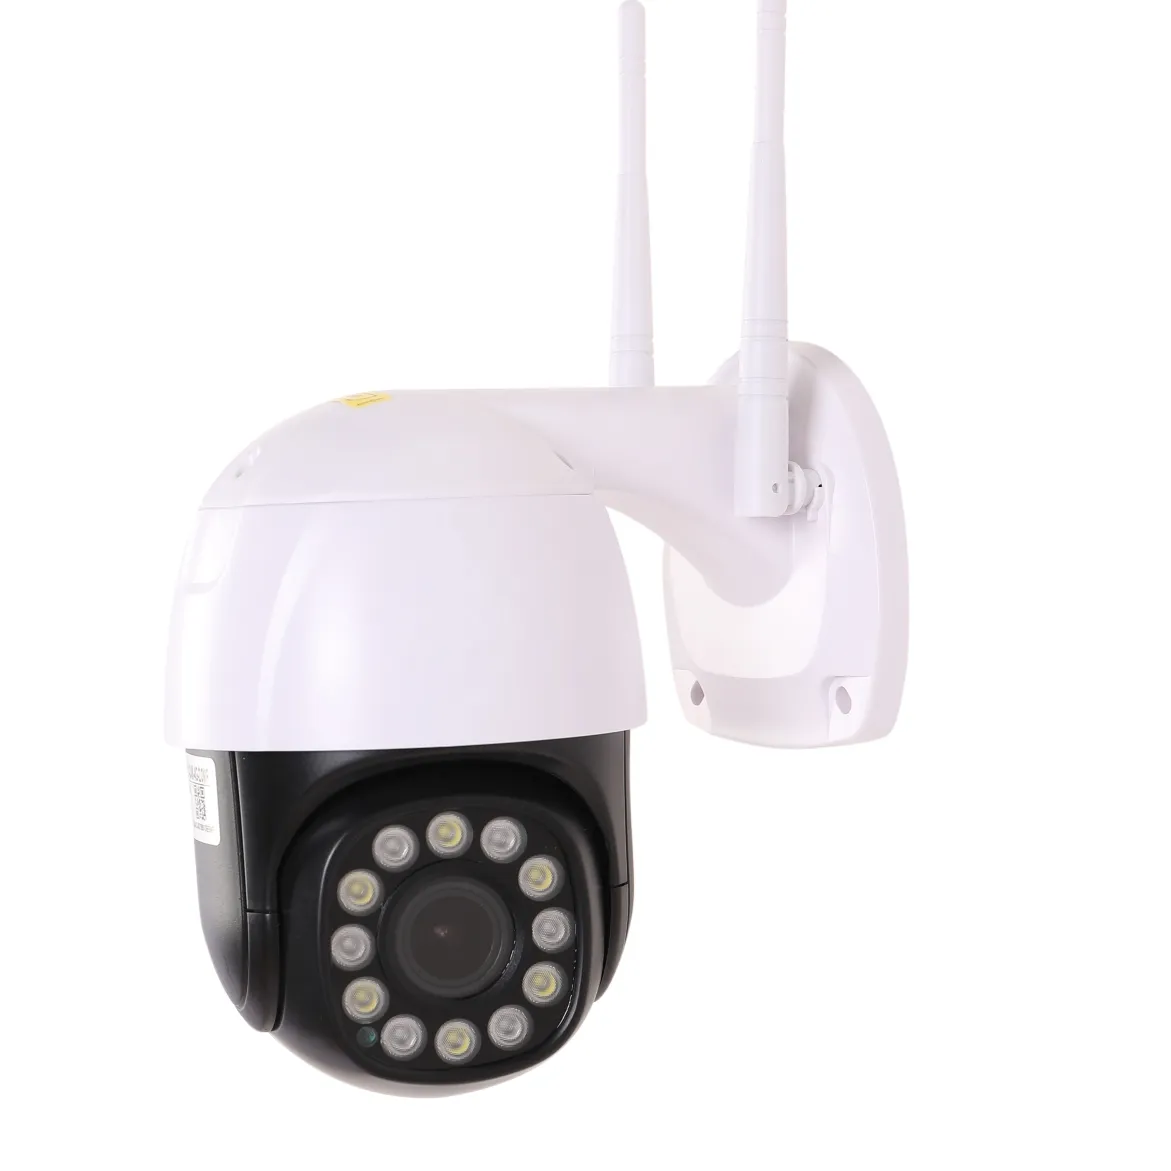 5MP wifi wireless wifi dome security ip network camera surveillance system waterproof outdoor ptz cctv camera